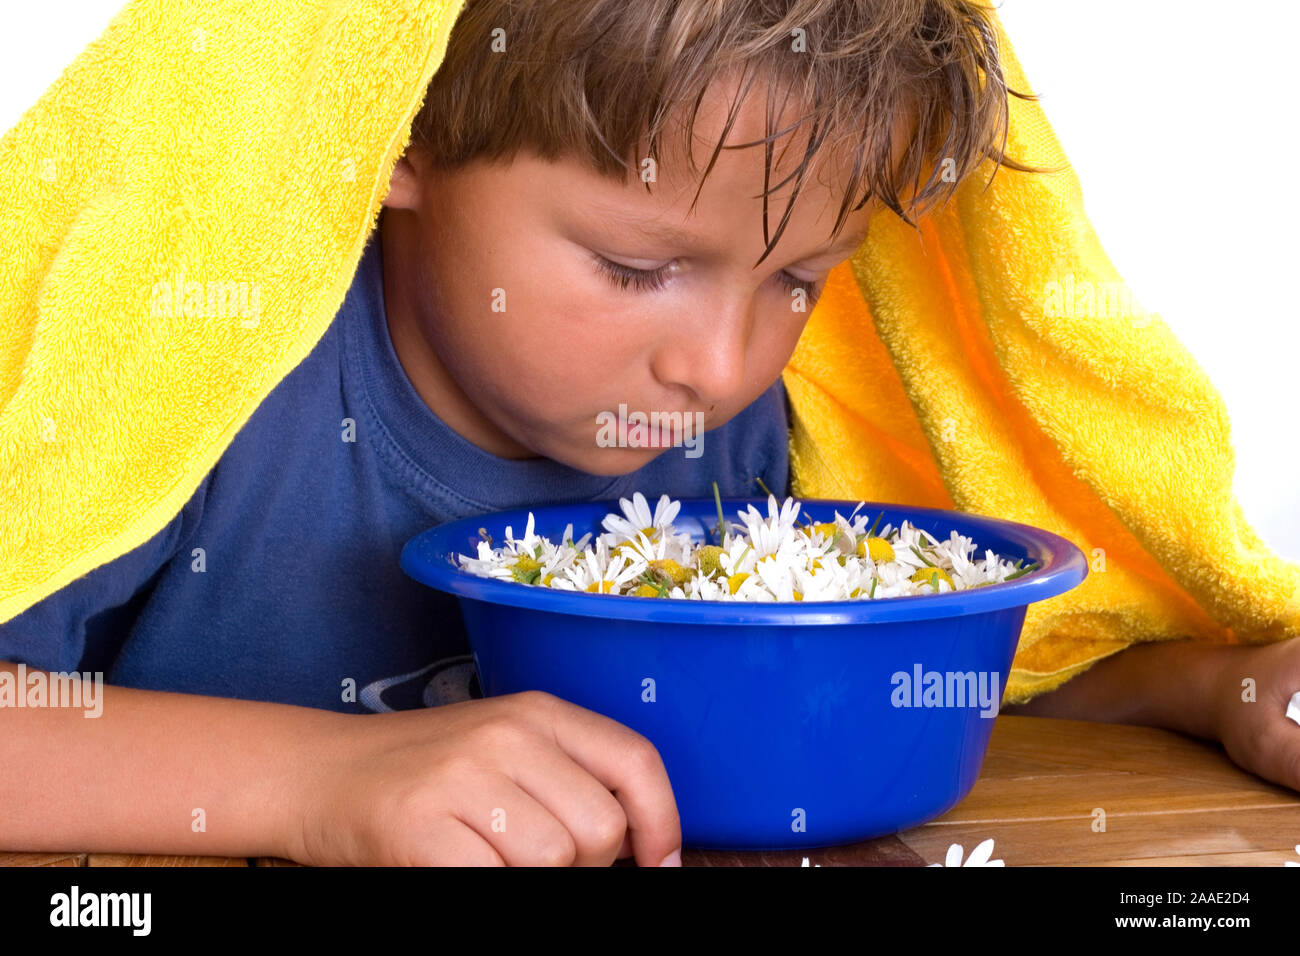 siebenjähriger Junge kuriert Erkältung mit Kamillendampf aus (mr) Stock Photo